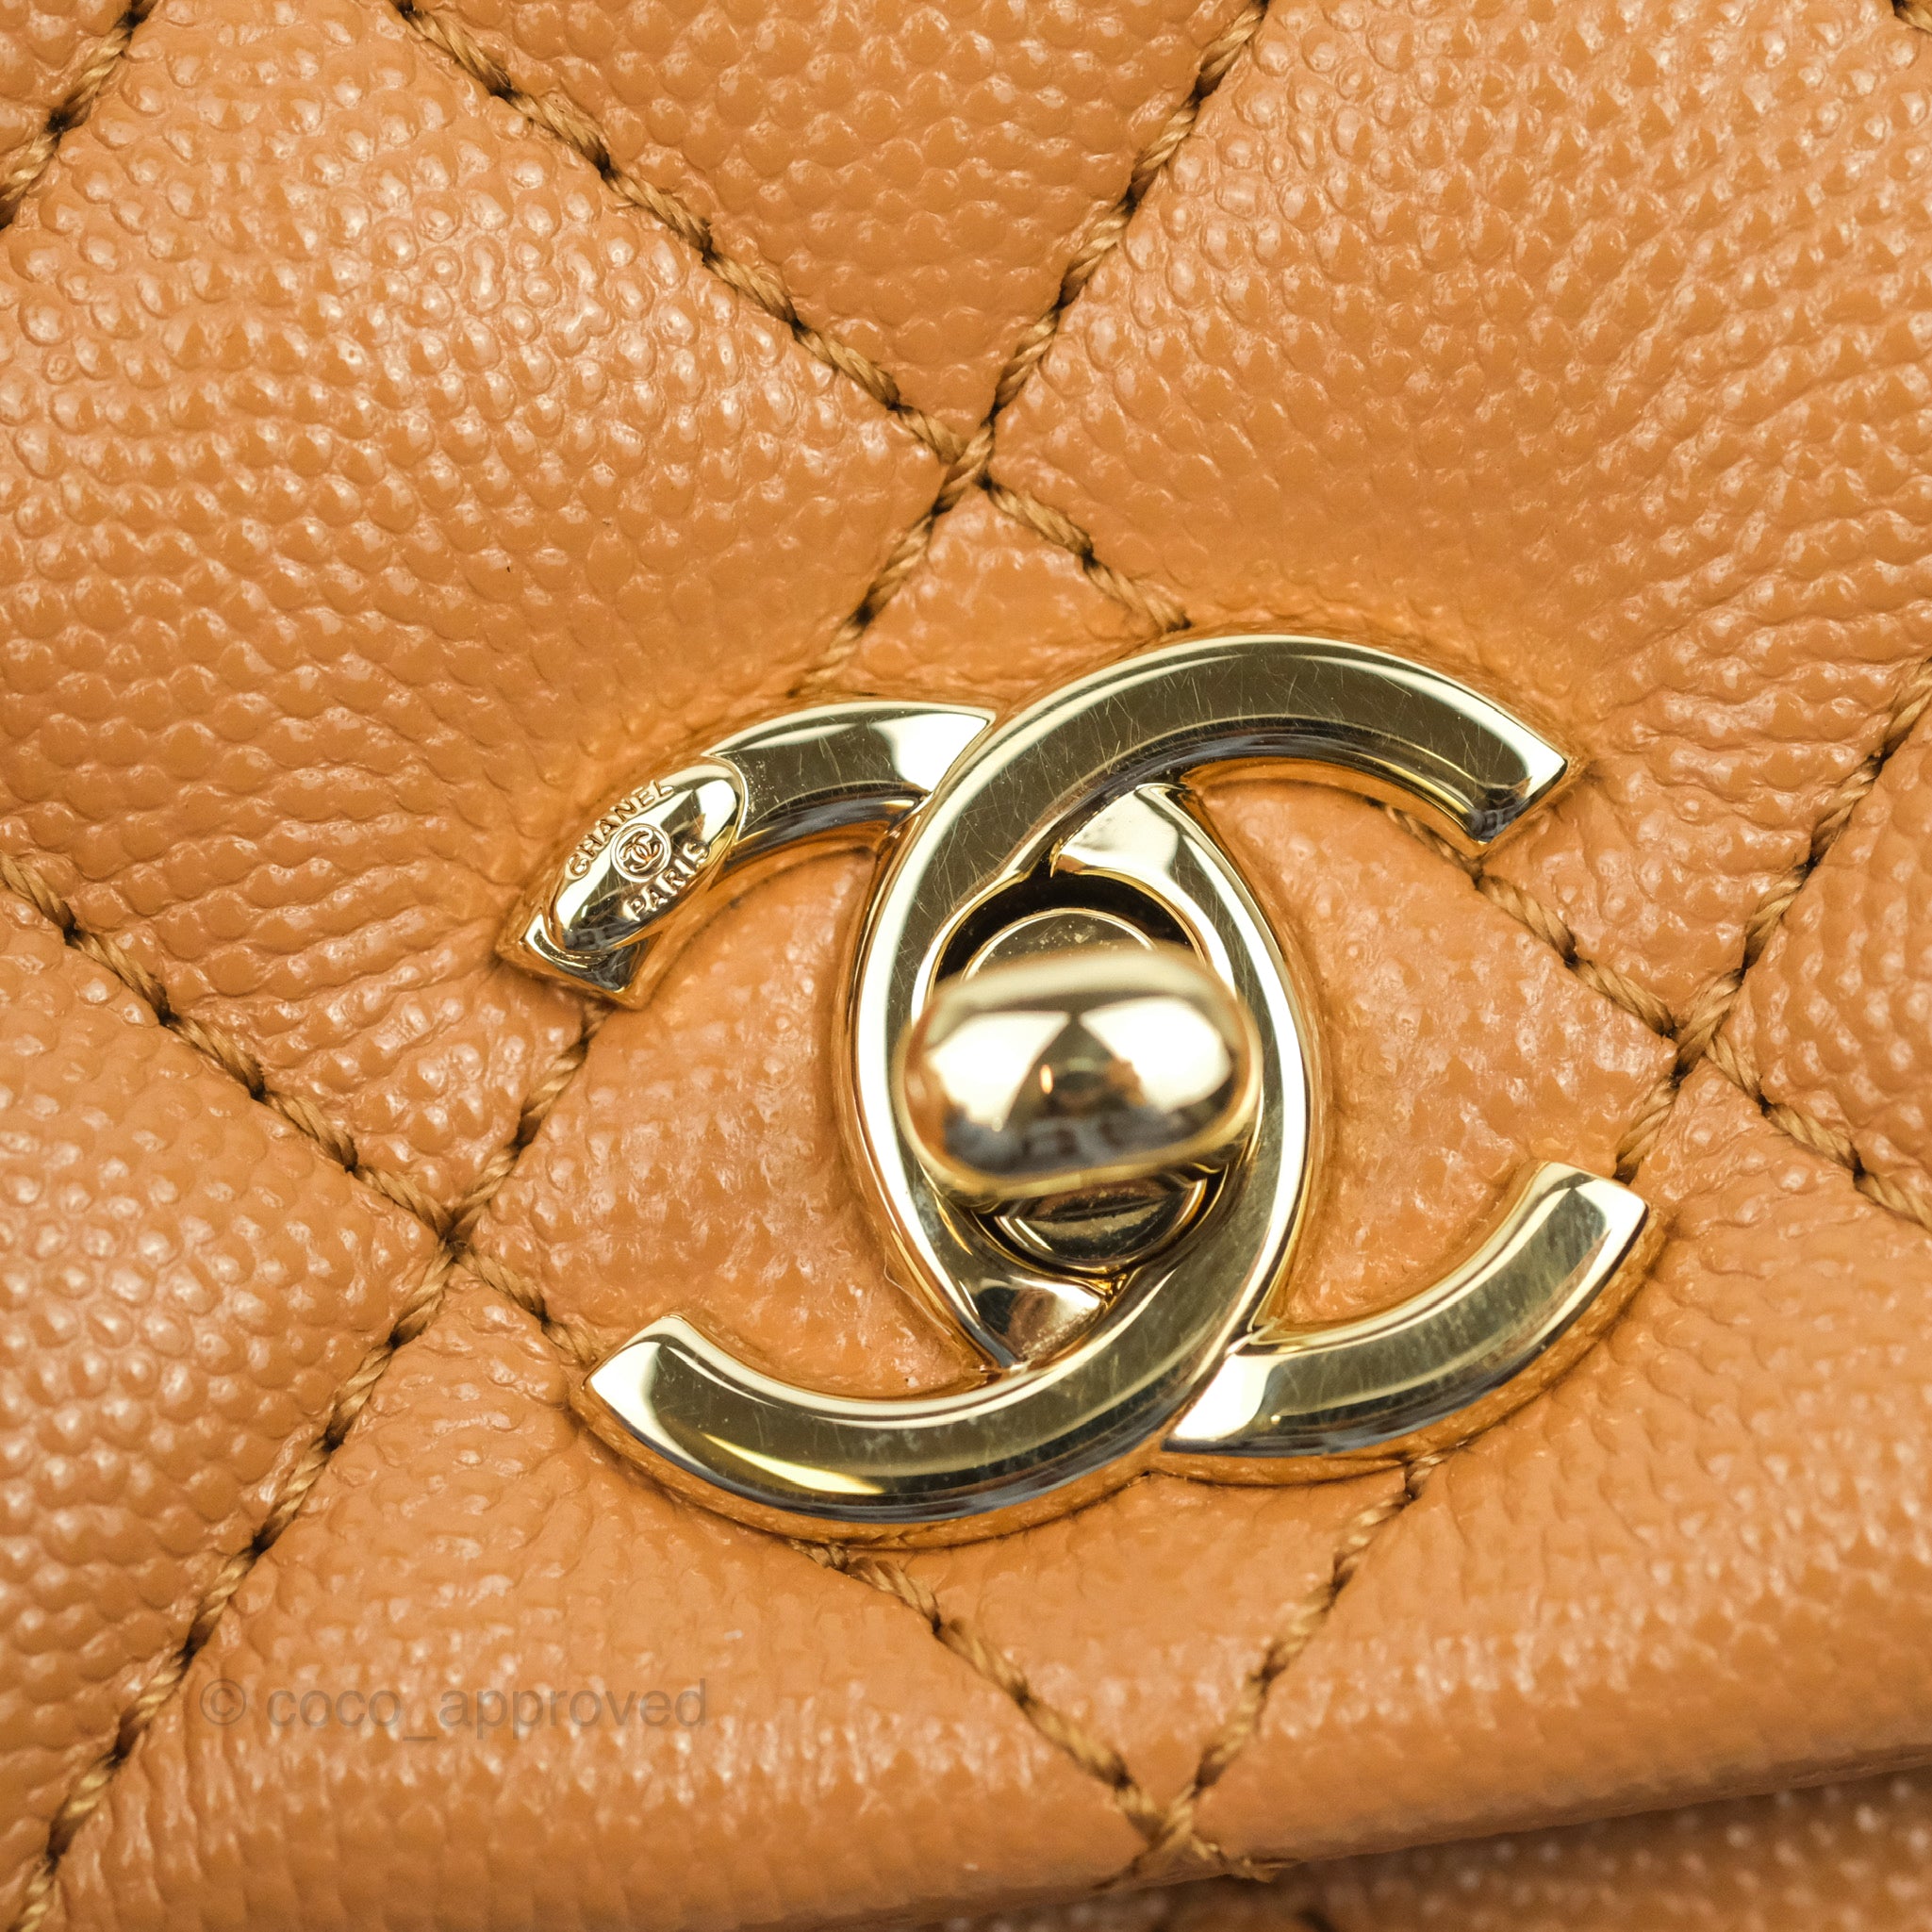 chanel classic flap with top handle handbag